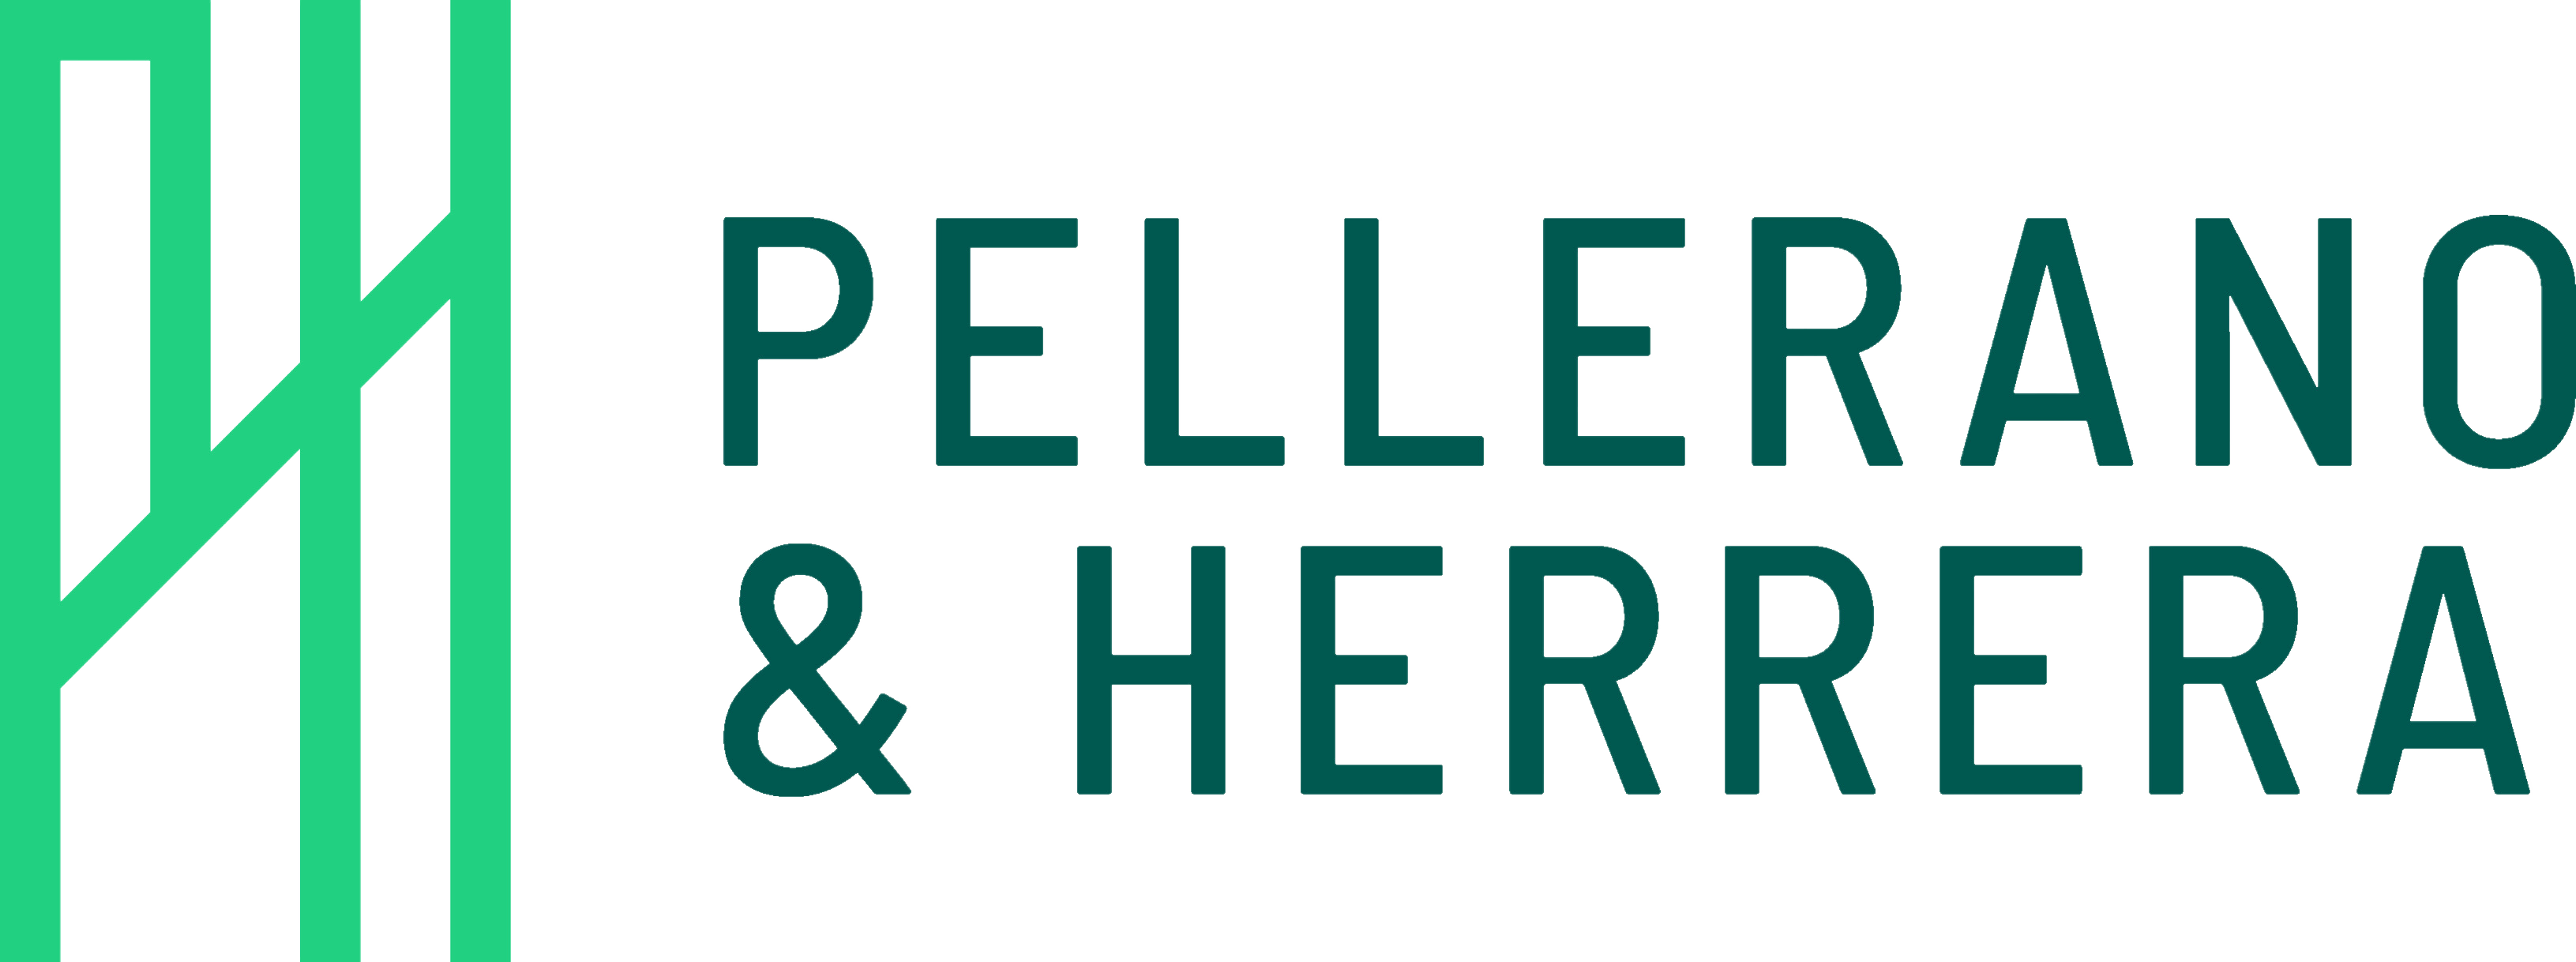 Pellerano & Herrera logo